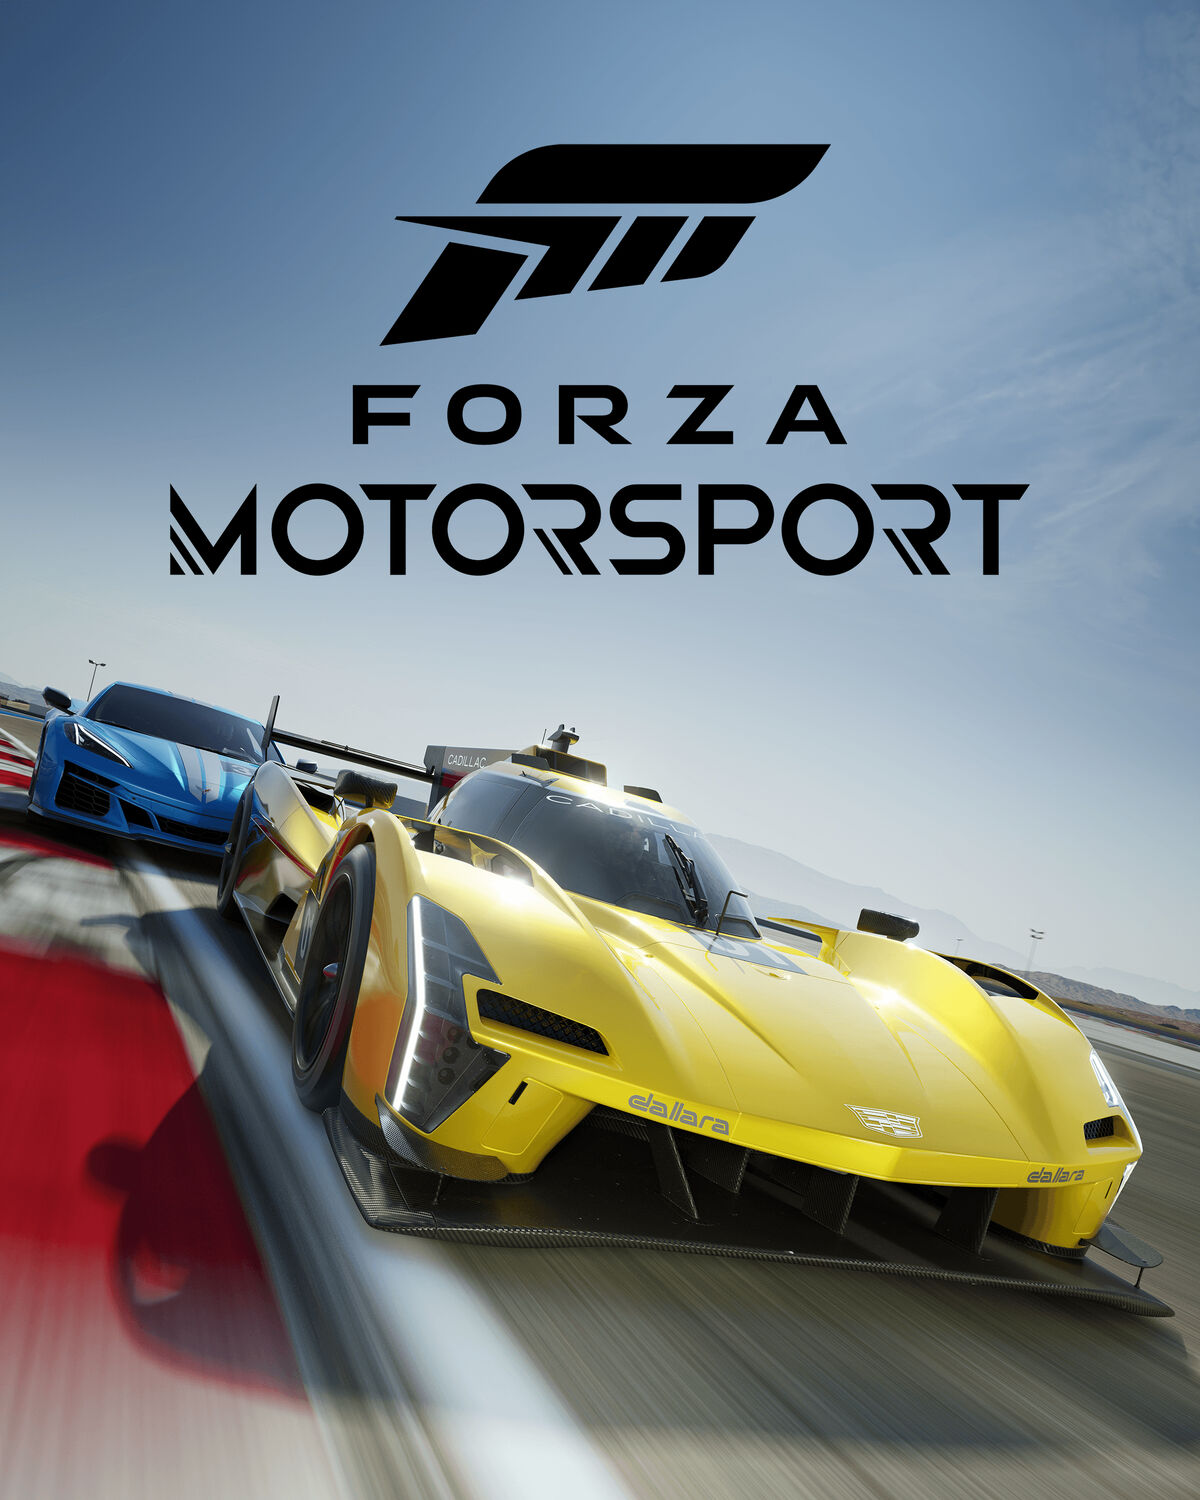 Forza Motorsport (2005 video game) - Wikipedia